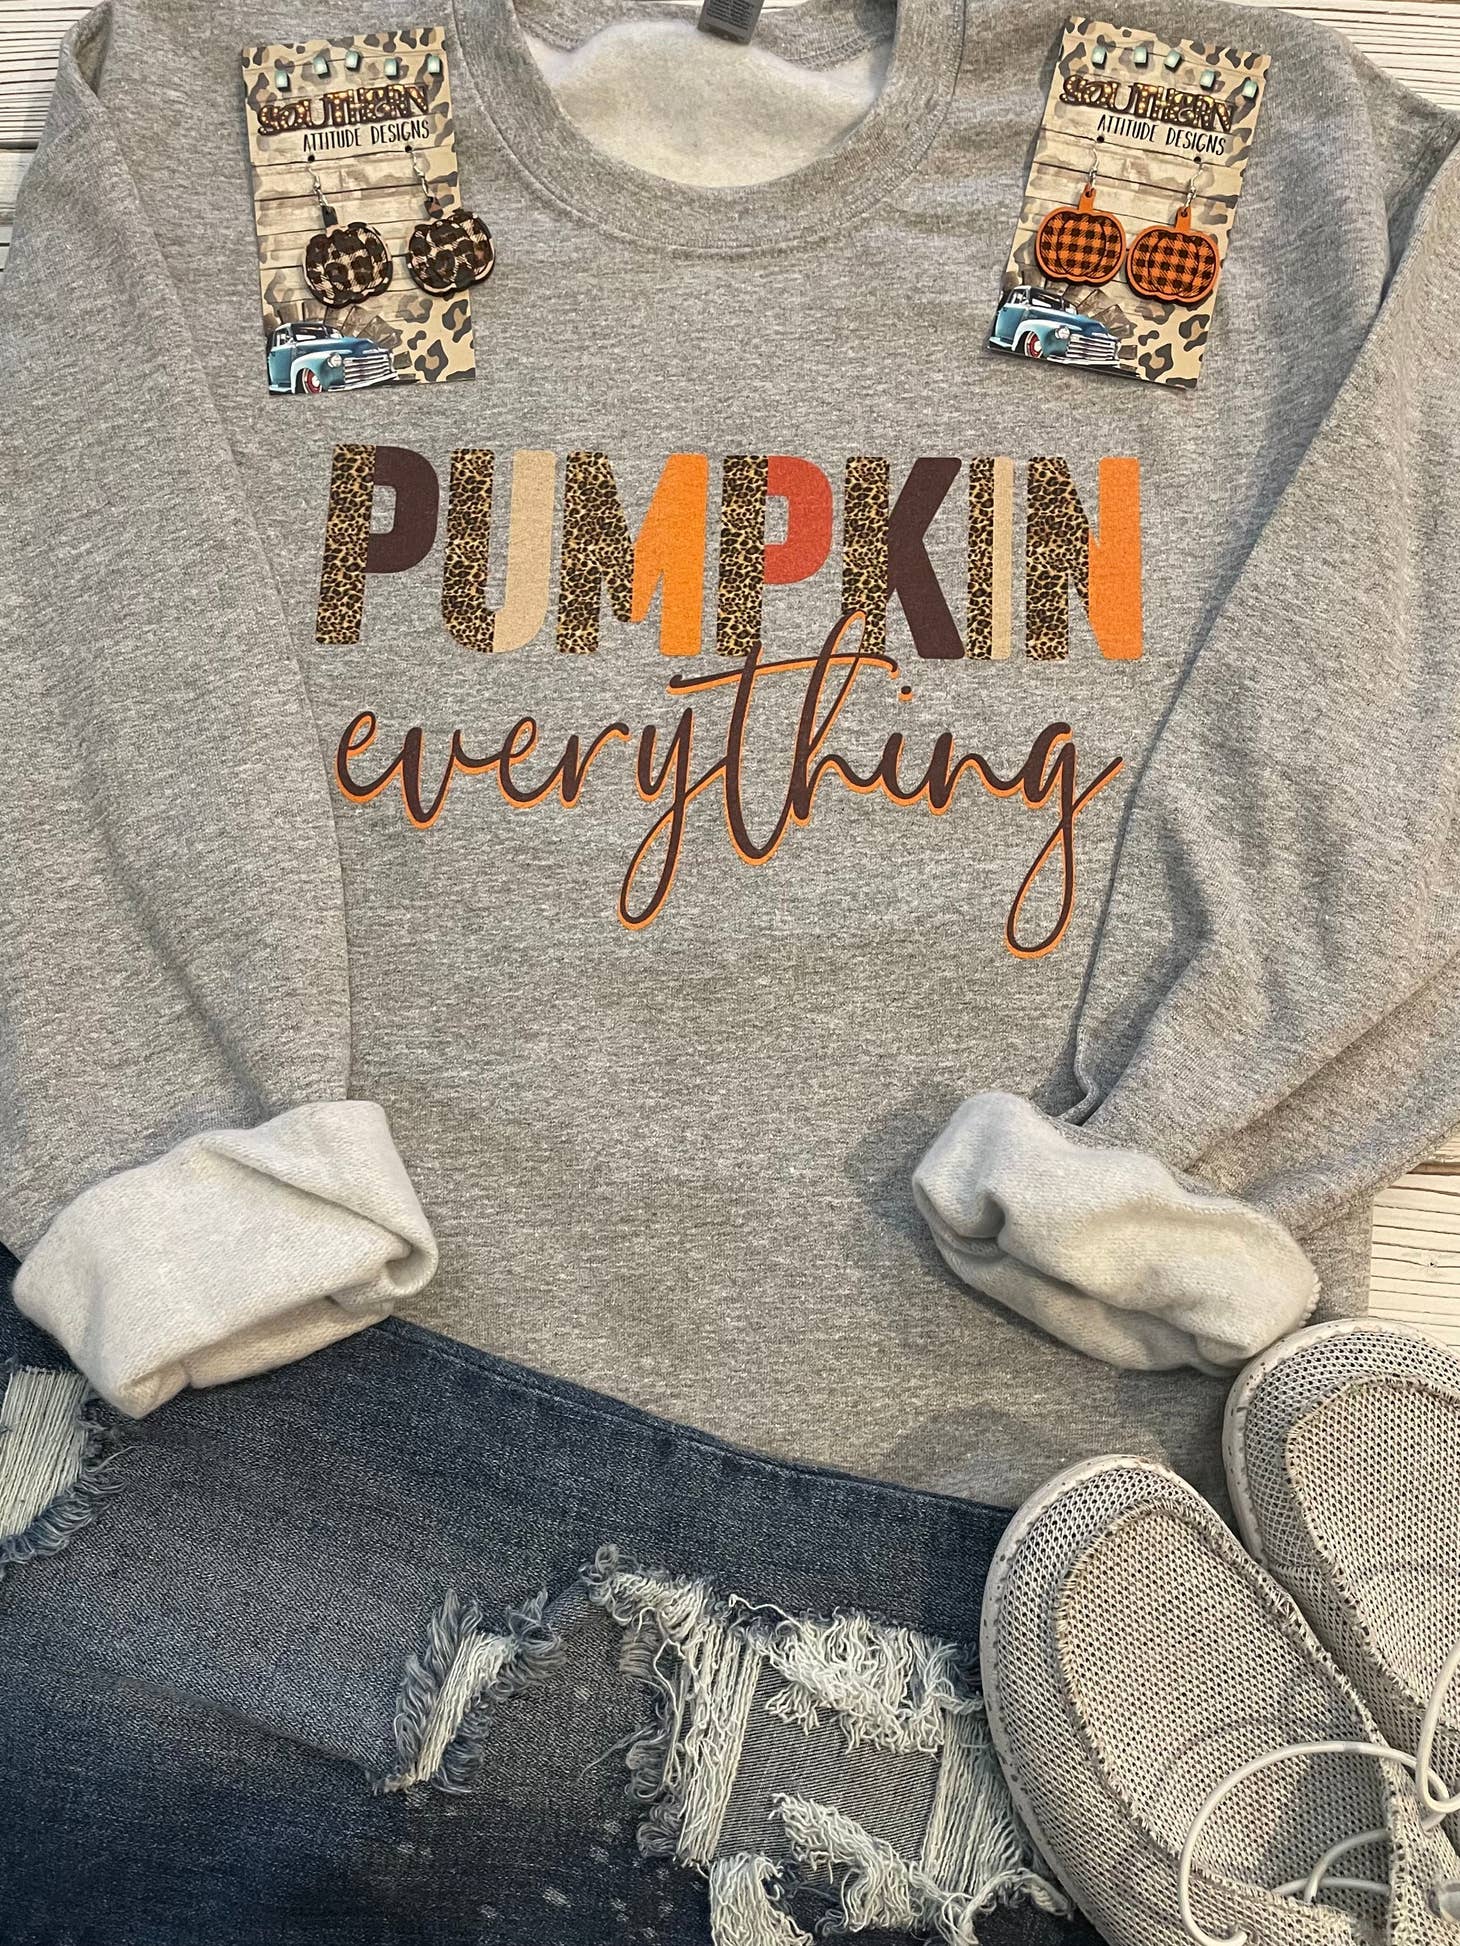 Pumpkin Everything Sweatshirt